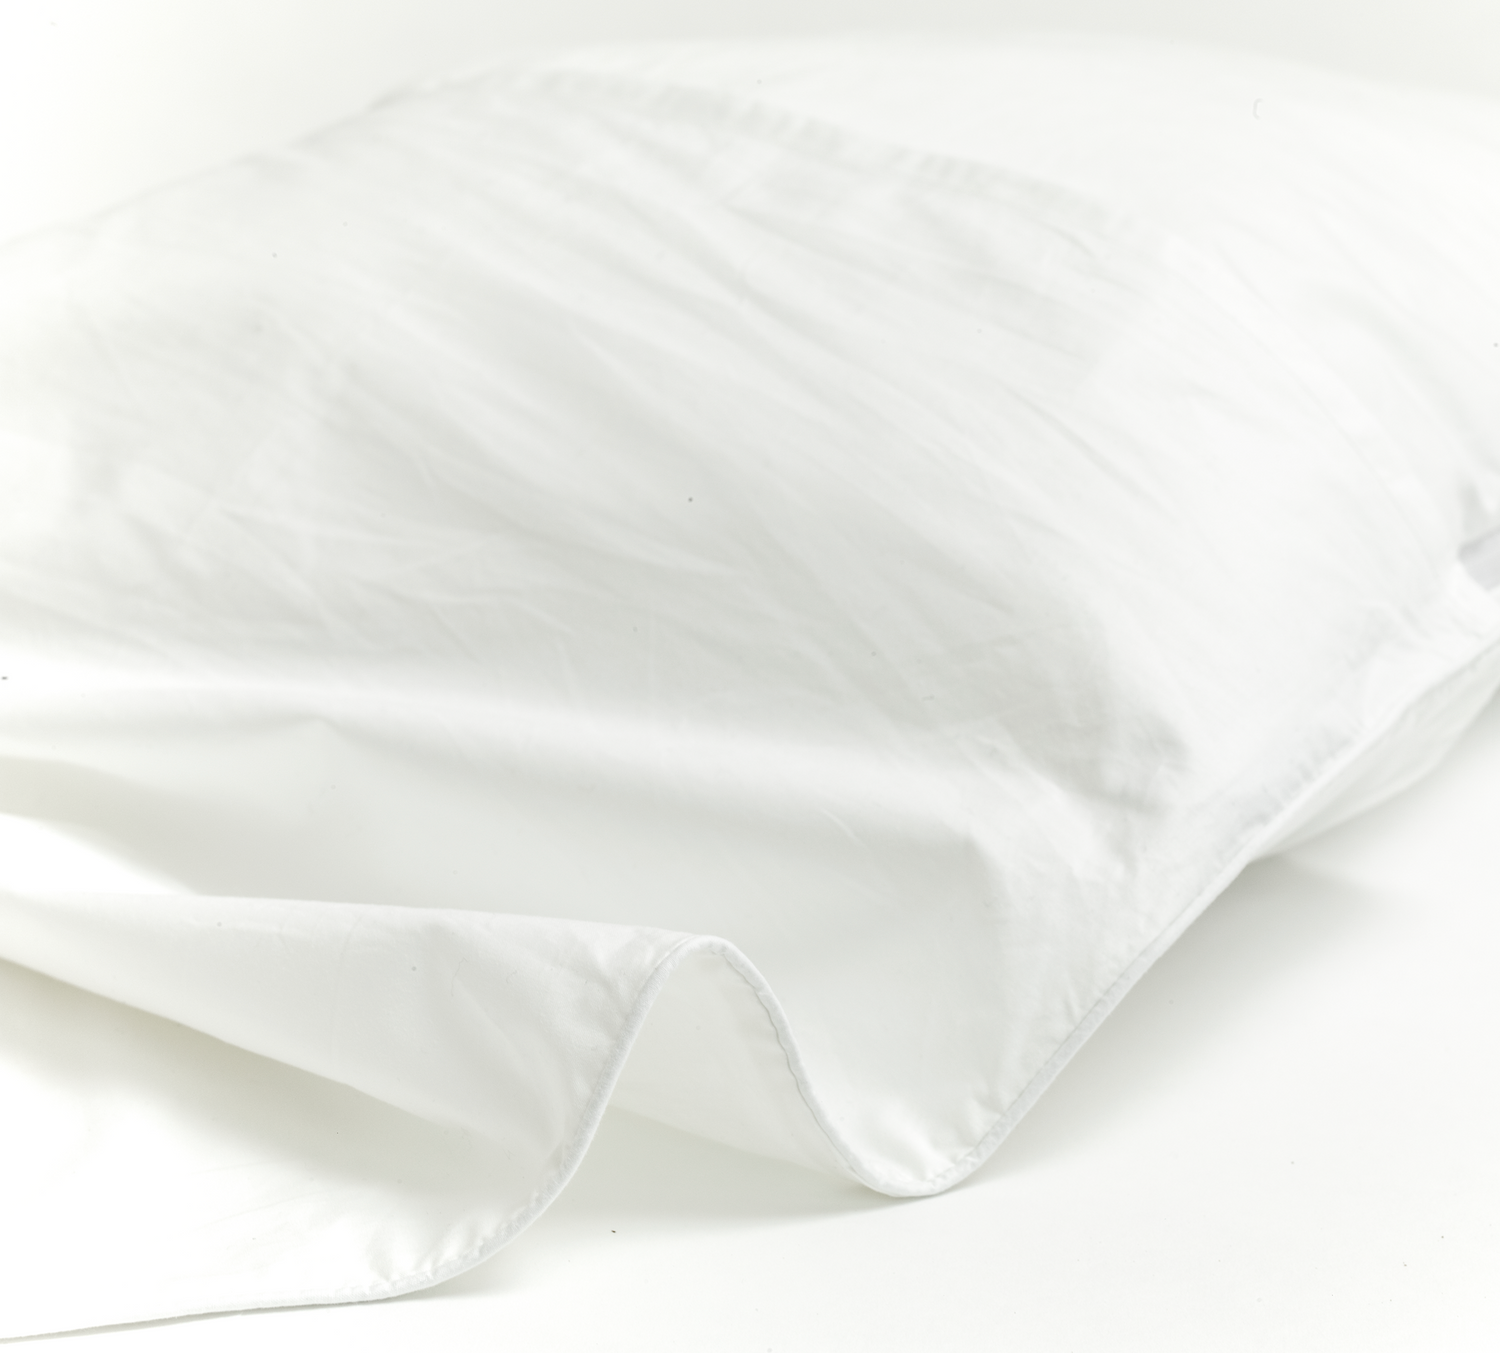 CottonLux Bounce Full Size Portable Pillow